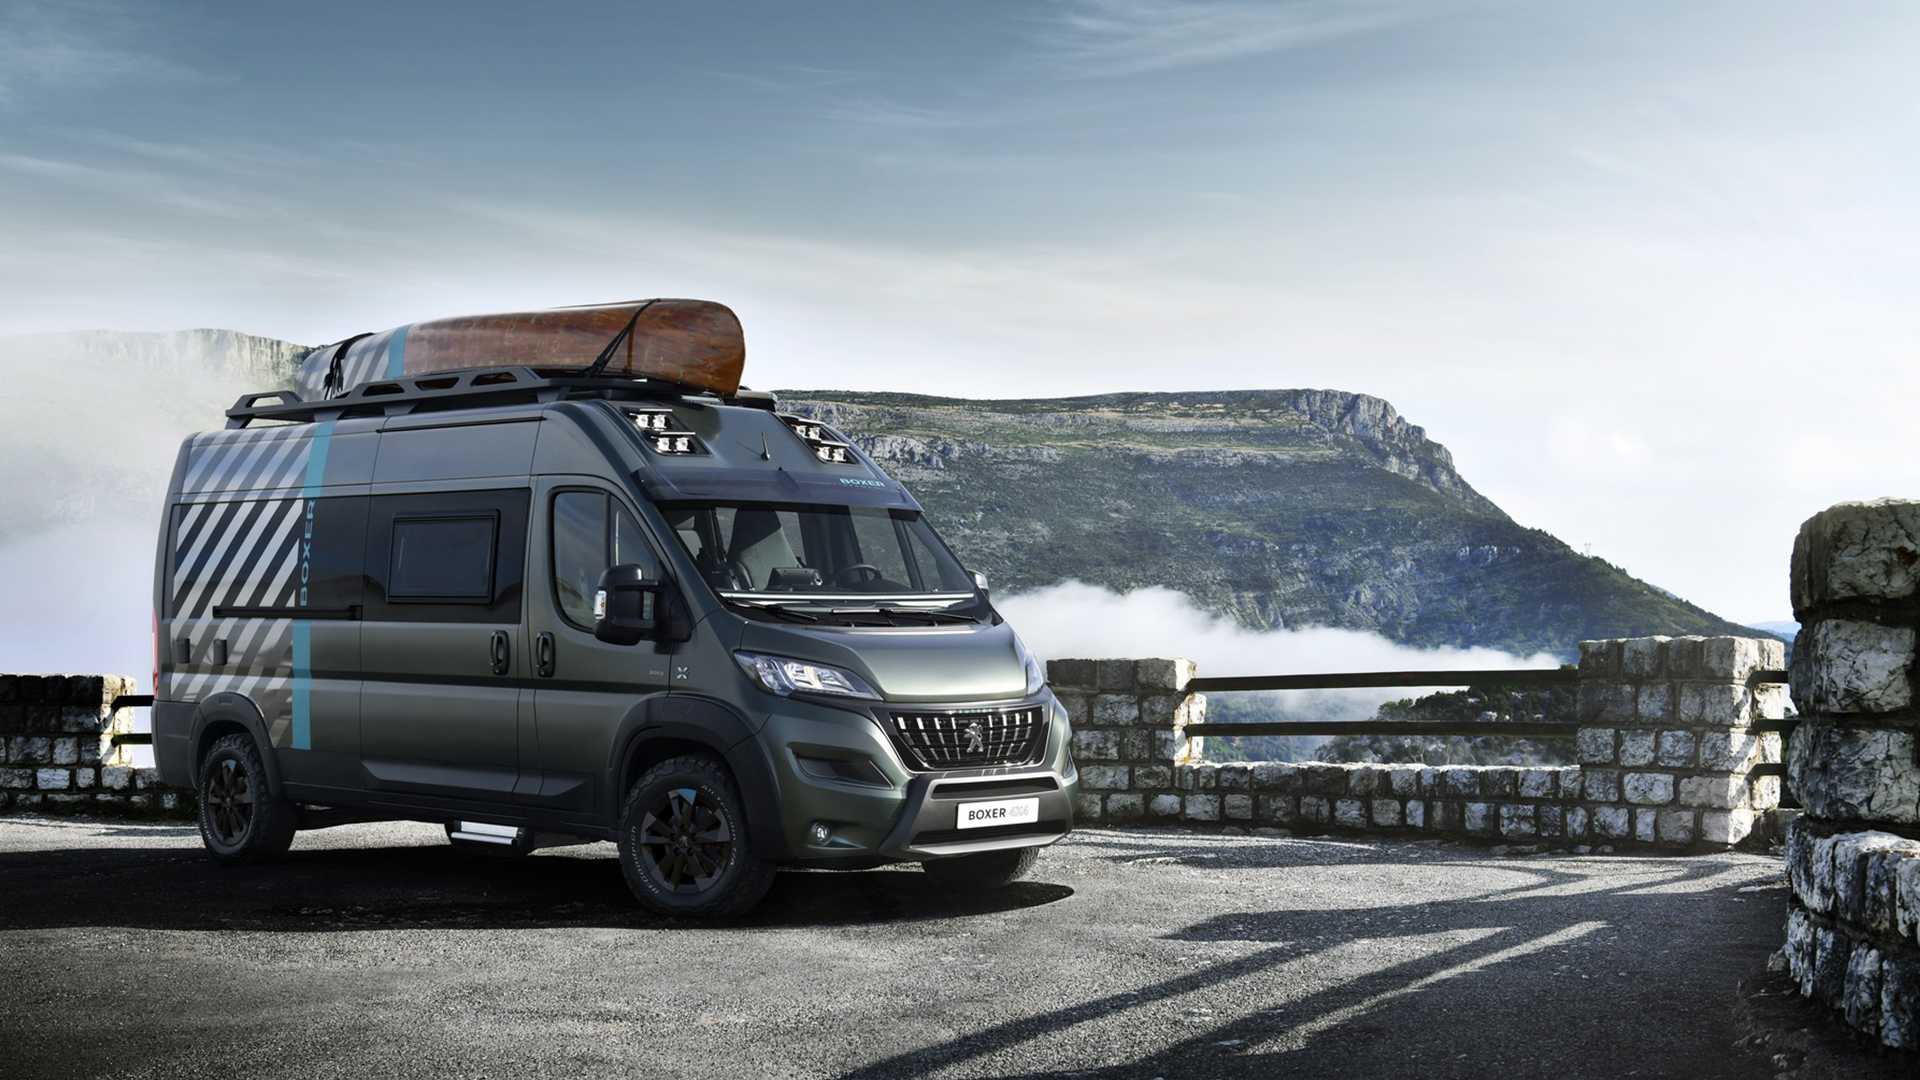 Peugeot Boxer 4×4 Concept Is One Rugged Camper Van